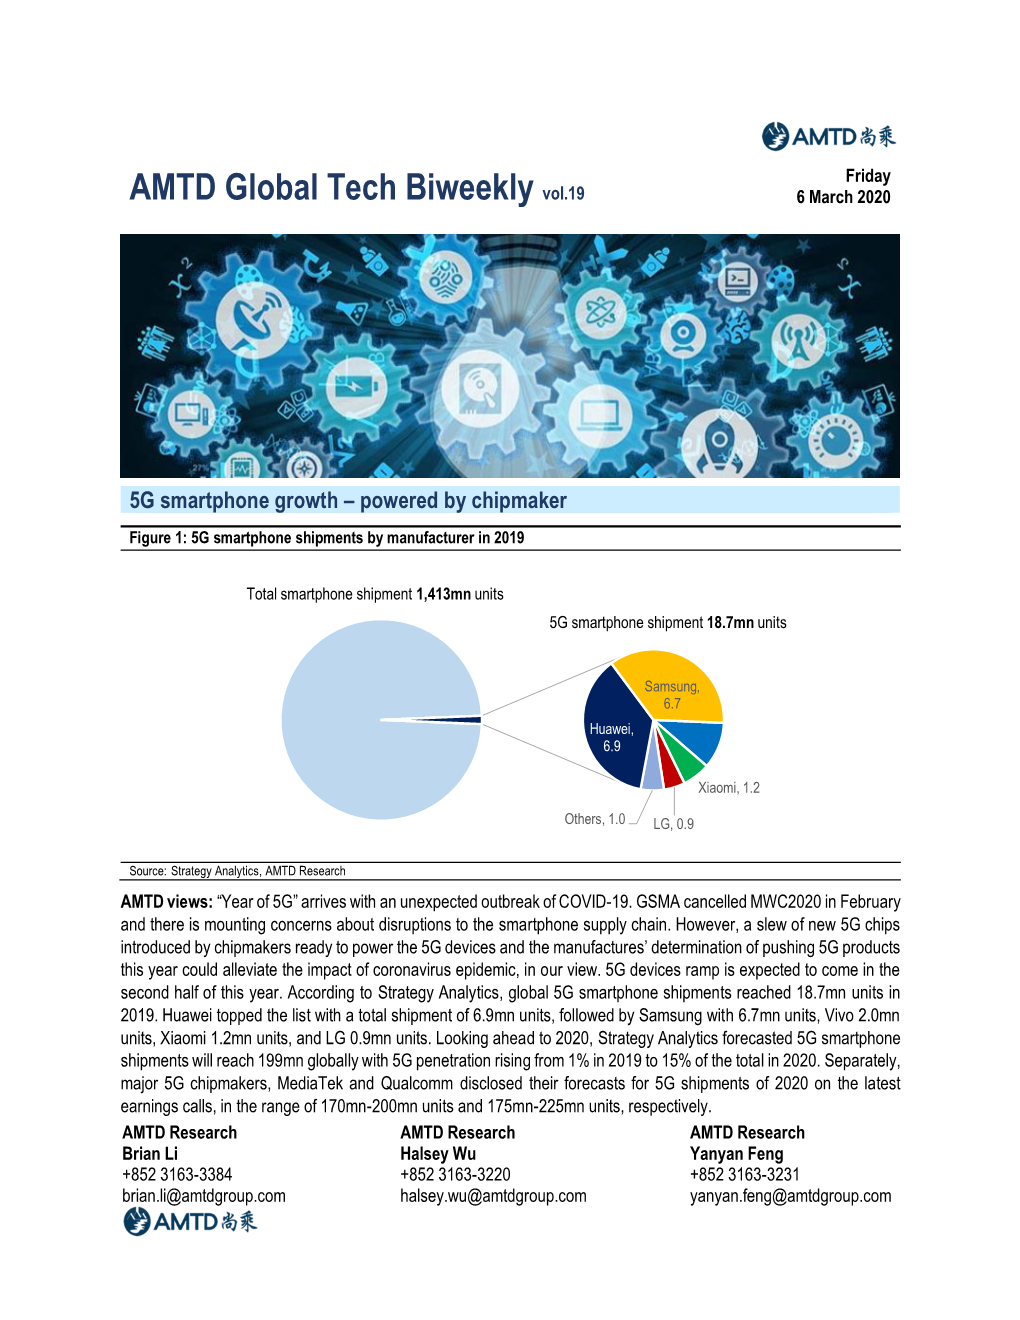 AMTD Global Tech Biweekly Vol.19 6 March 2020